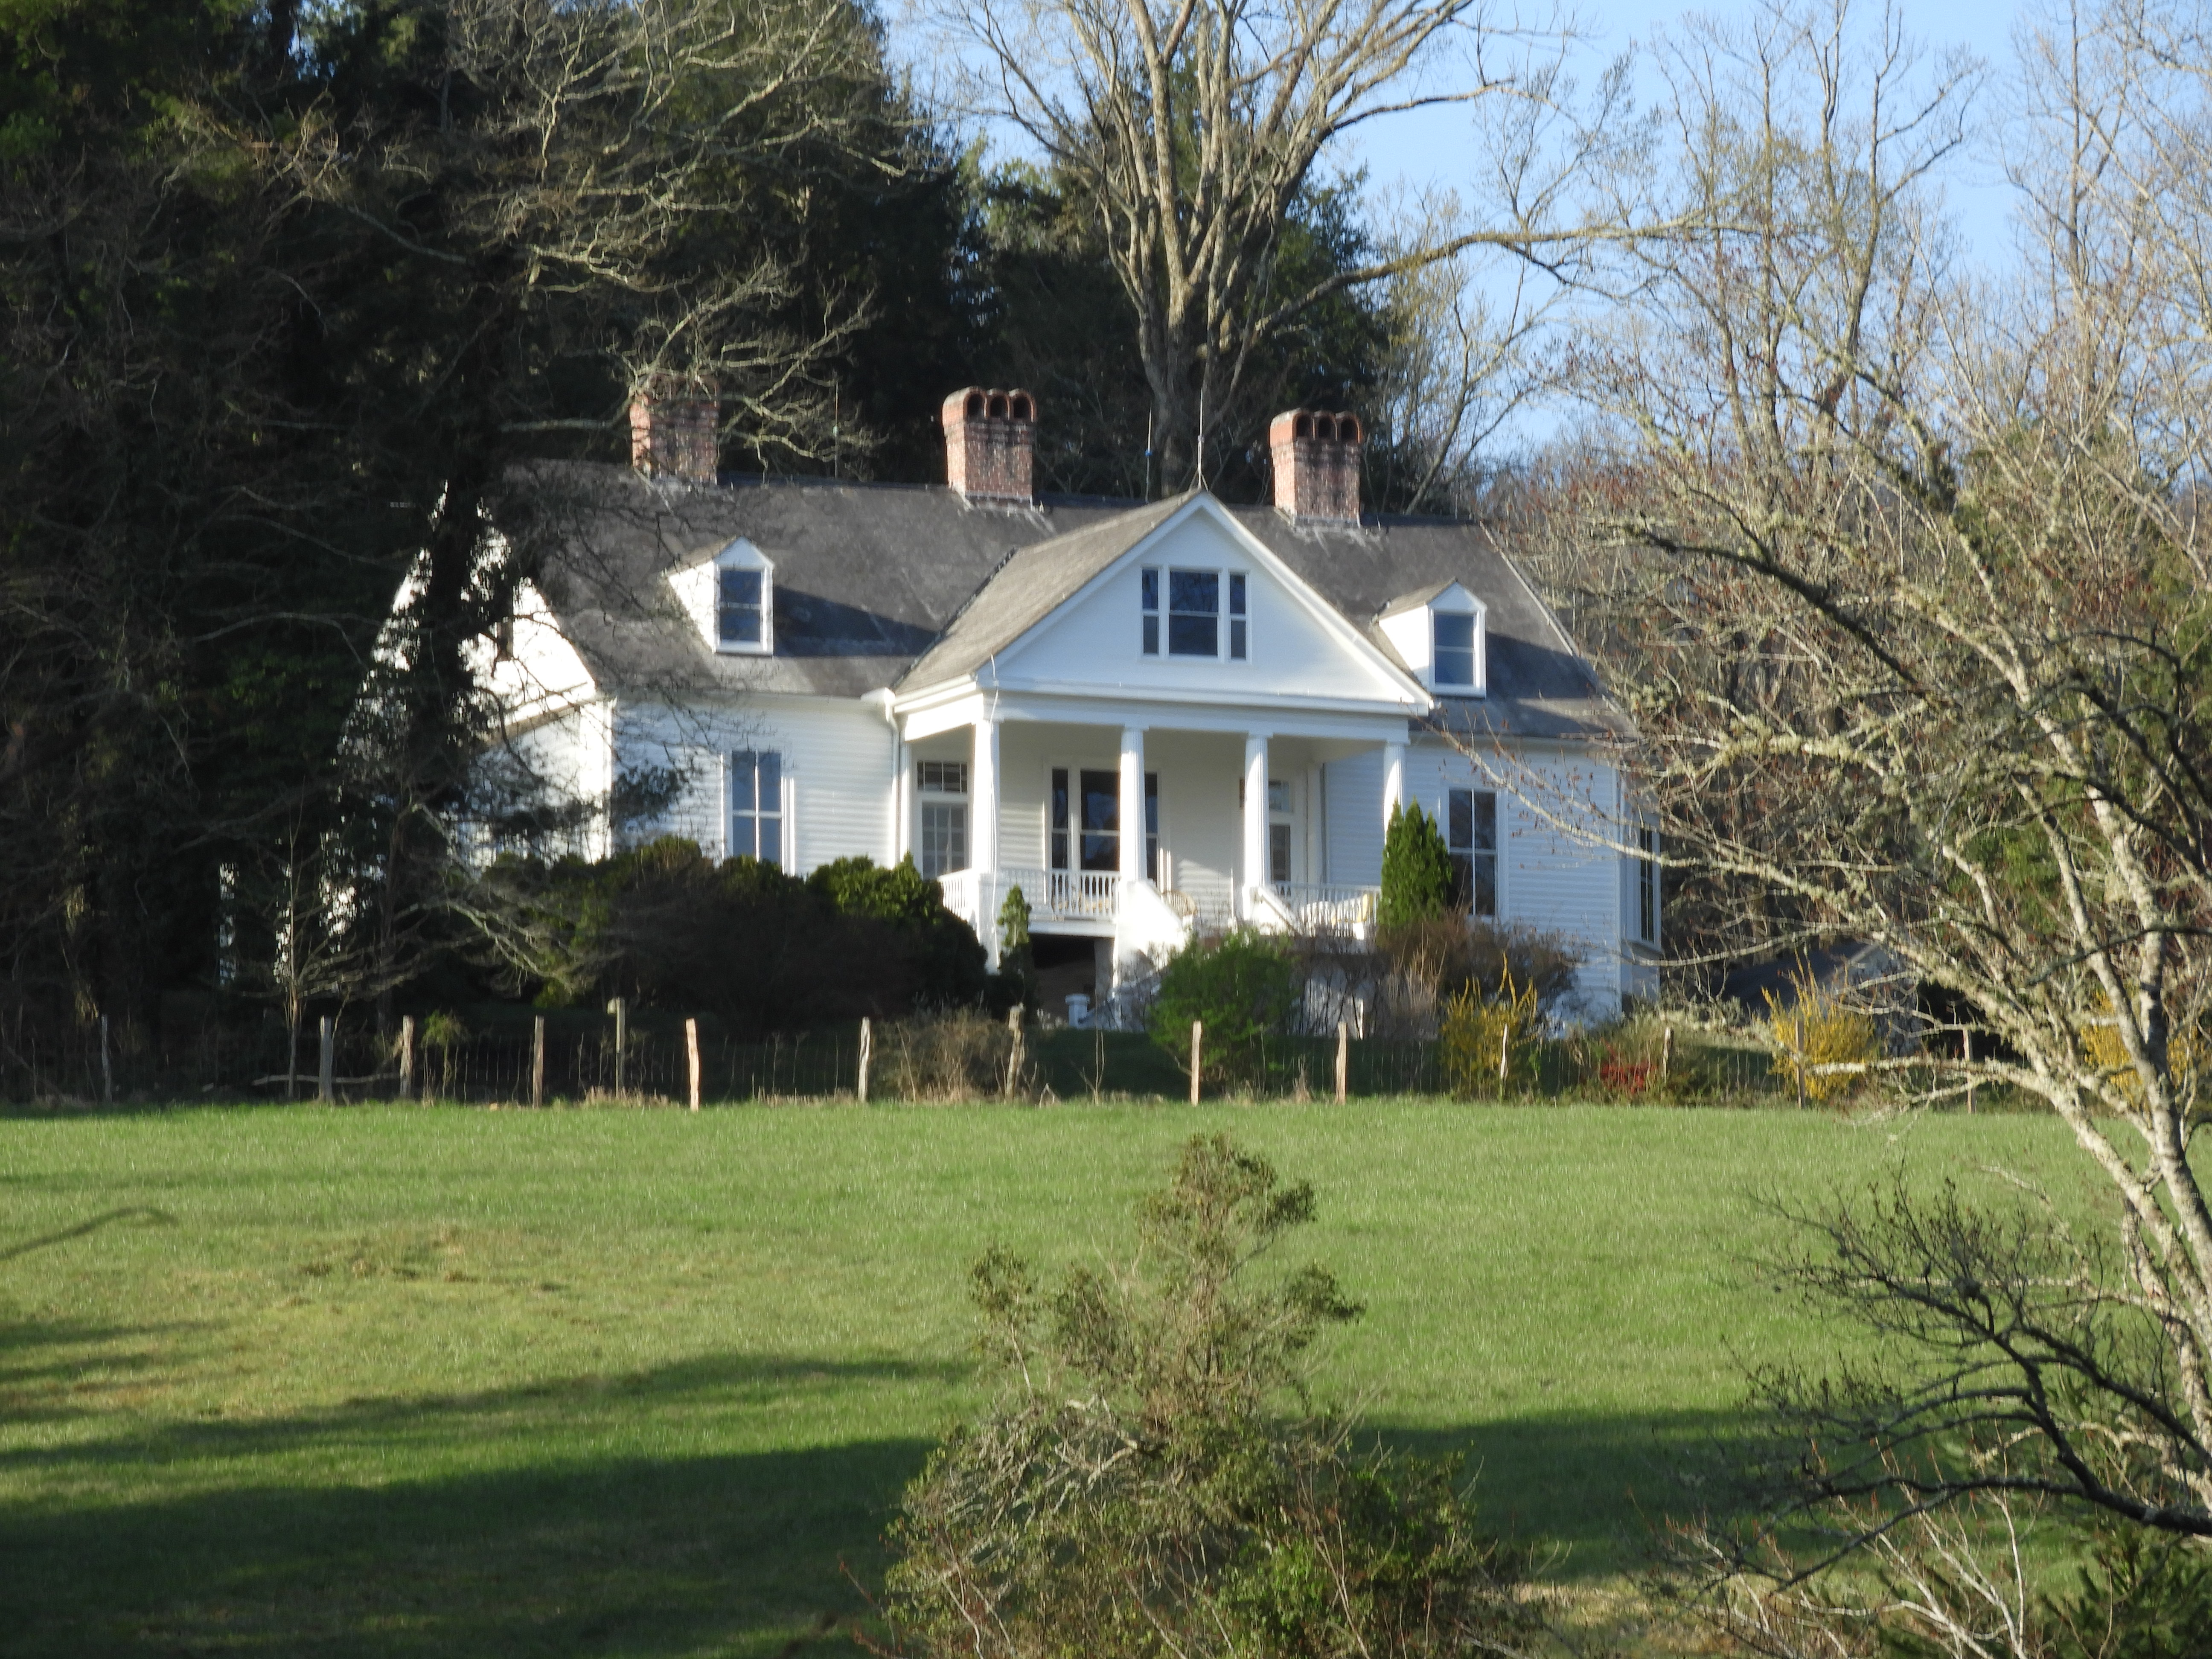 Home of poet Carl Sandburg in Flat Rock North Carolina